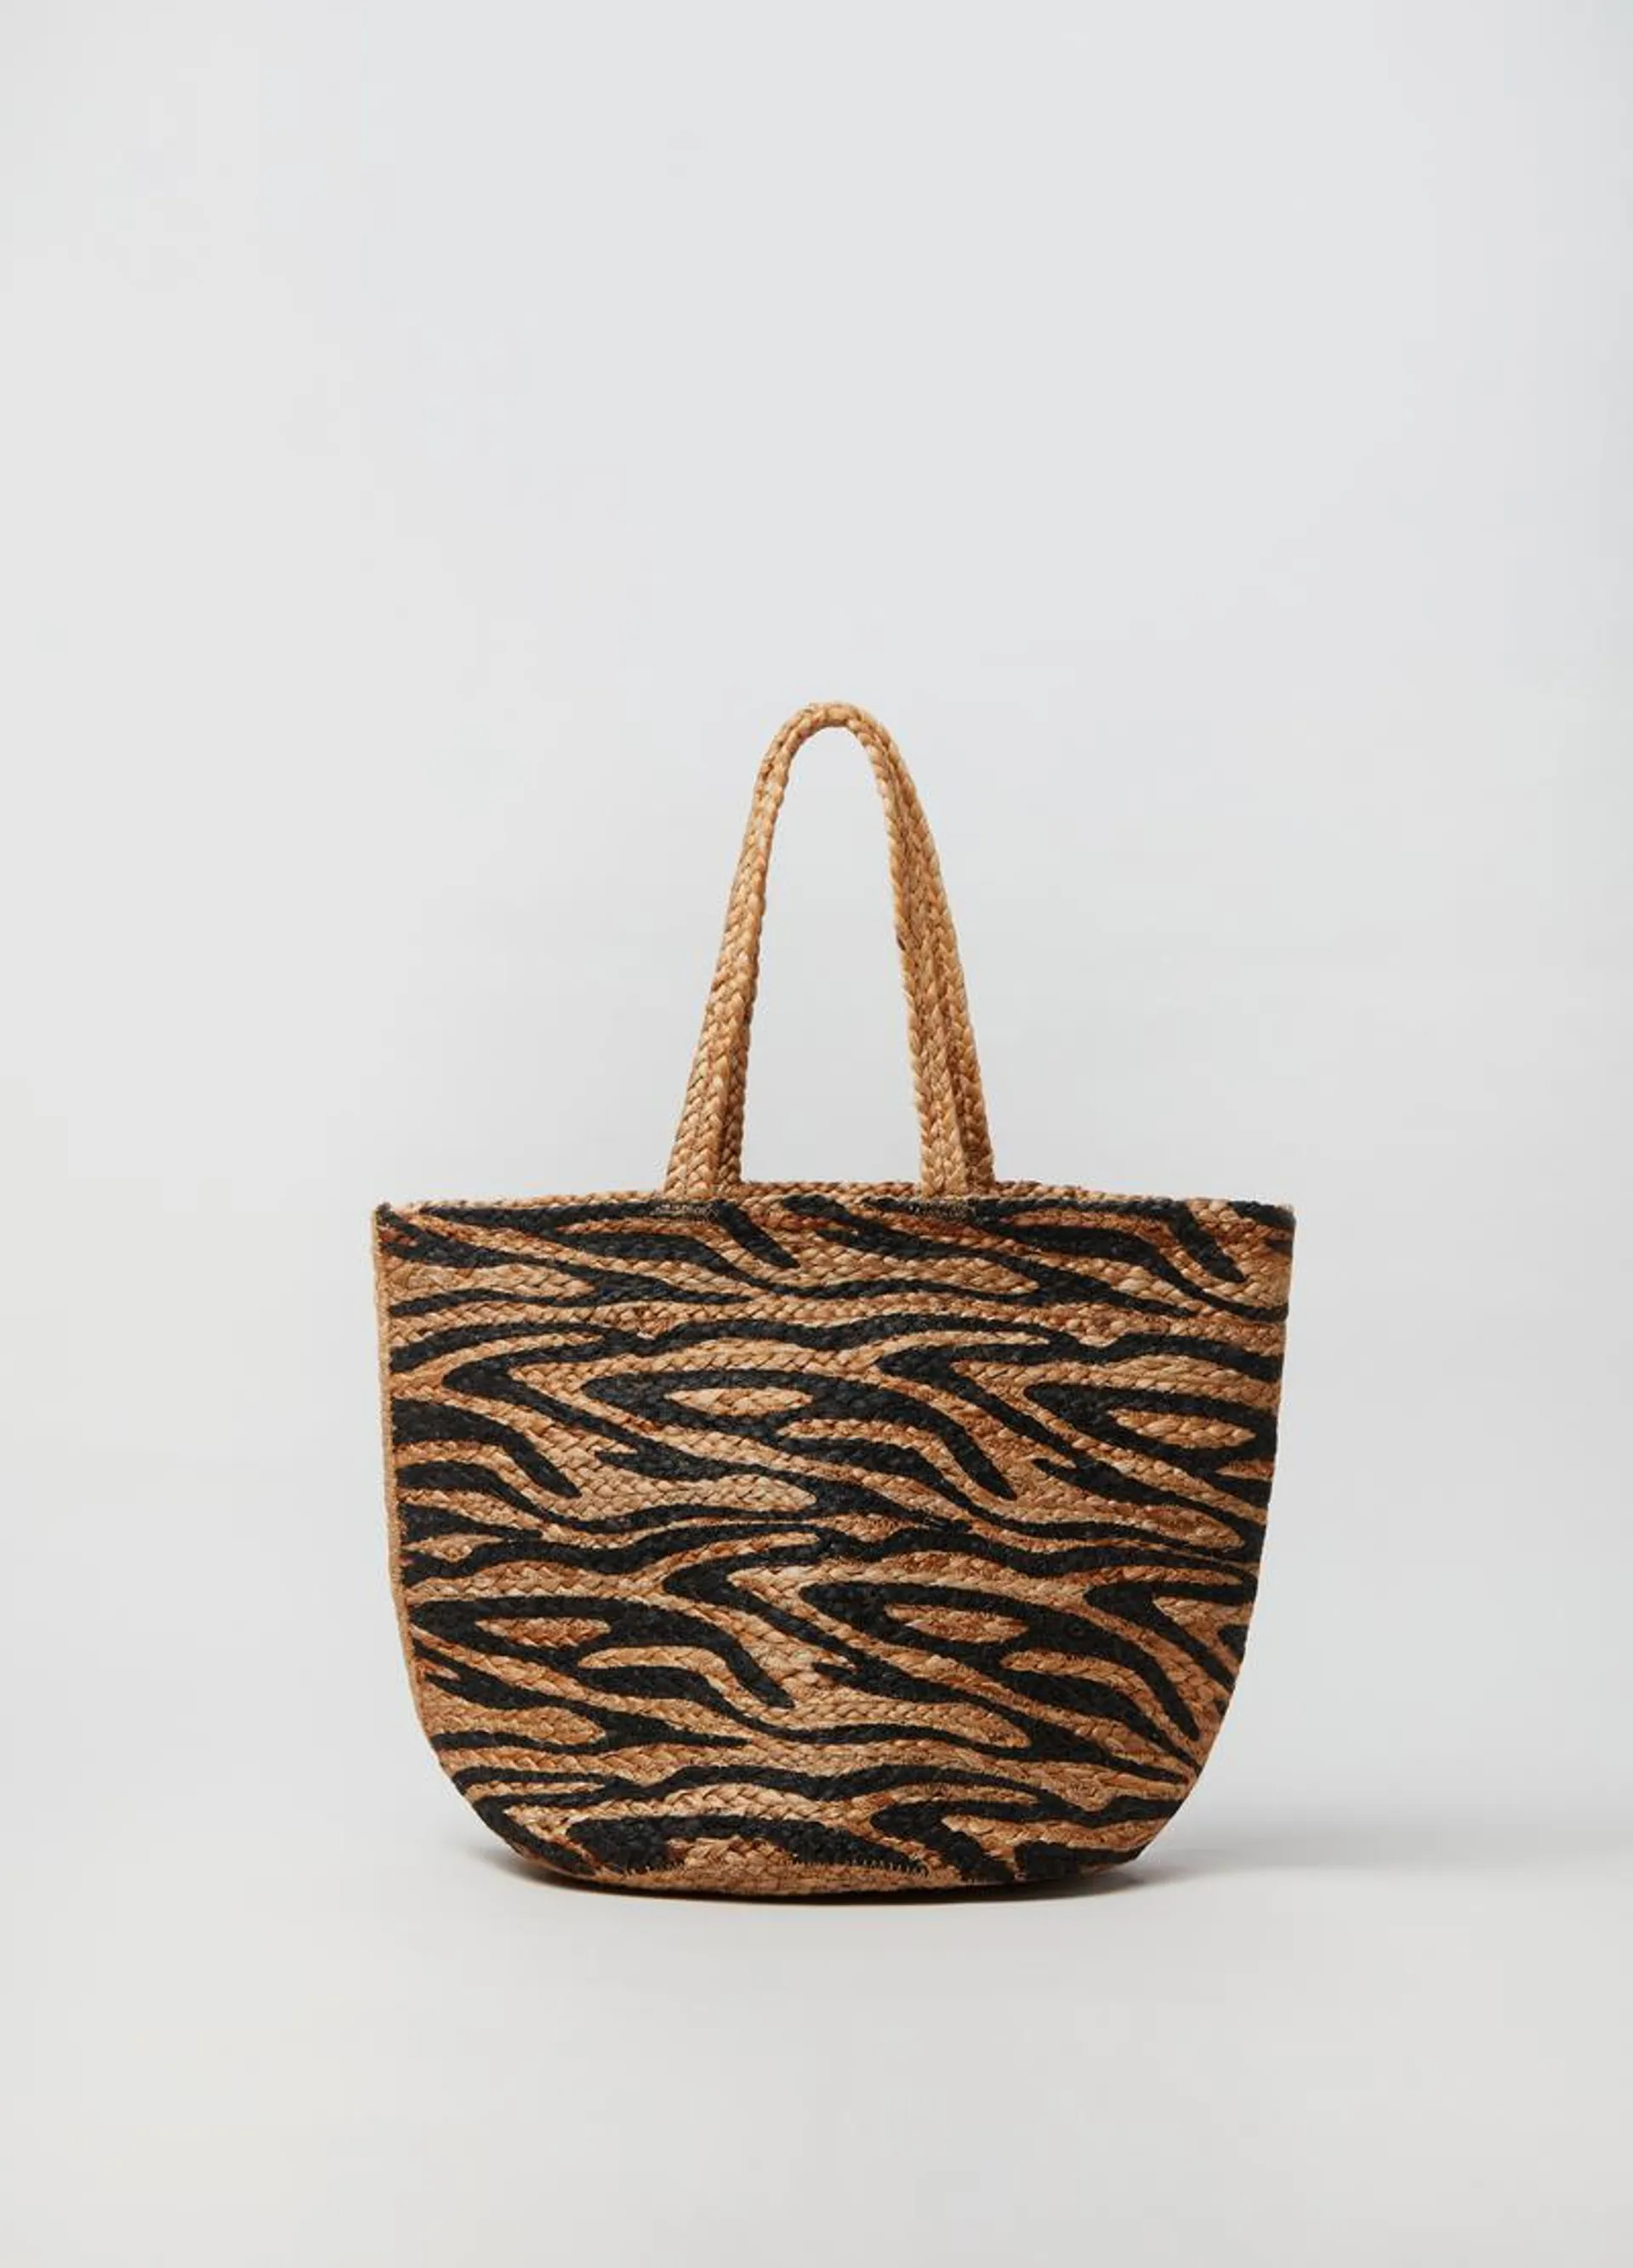 Raffia bag with animal print pattern